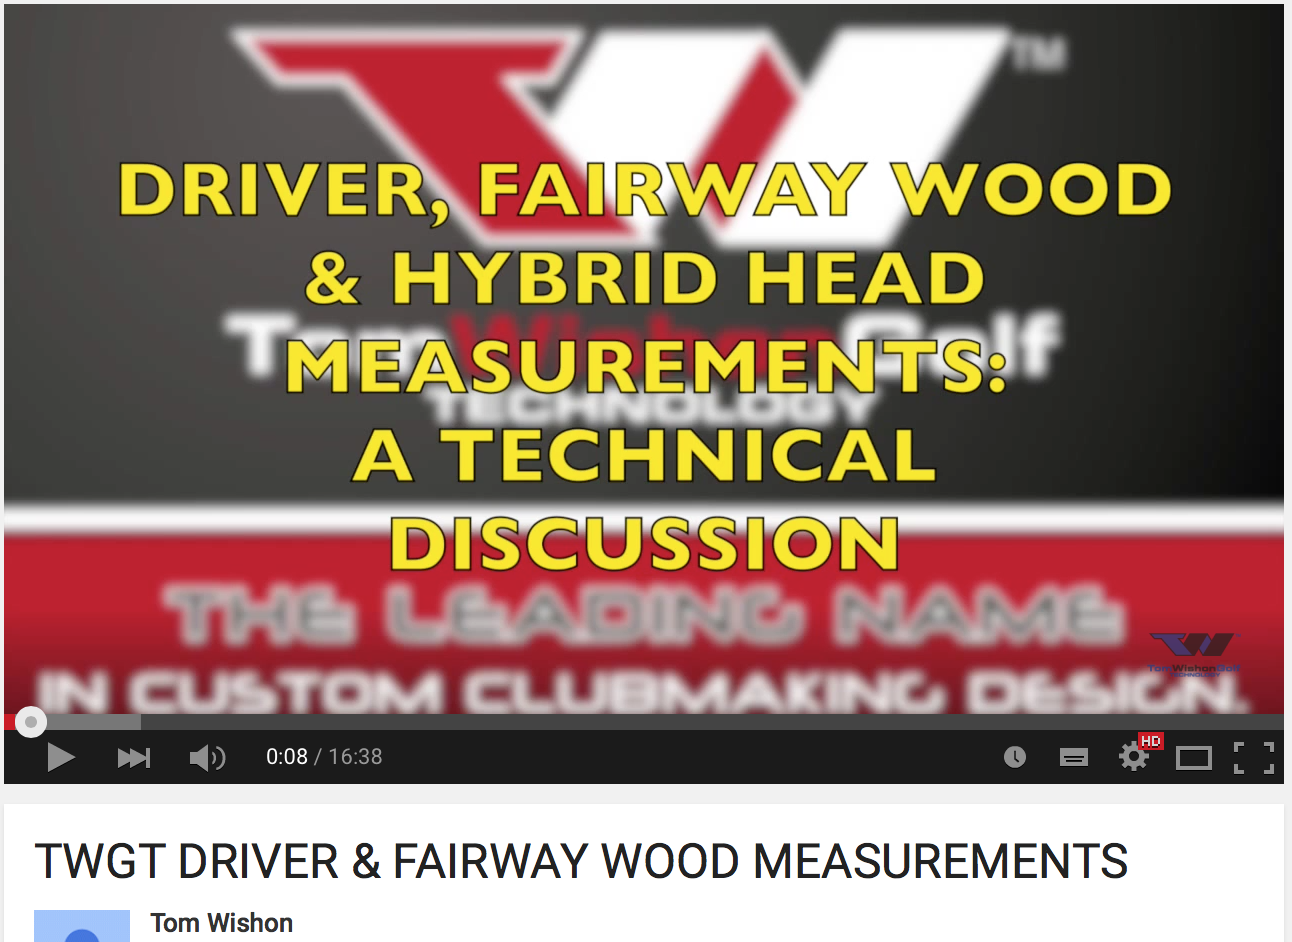 TWGT DRIVER & FAIRWAY WOOD MEASUREMENTS